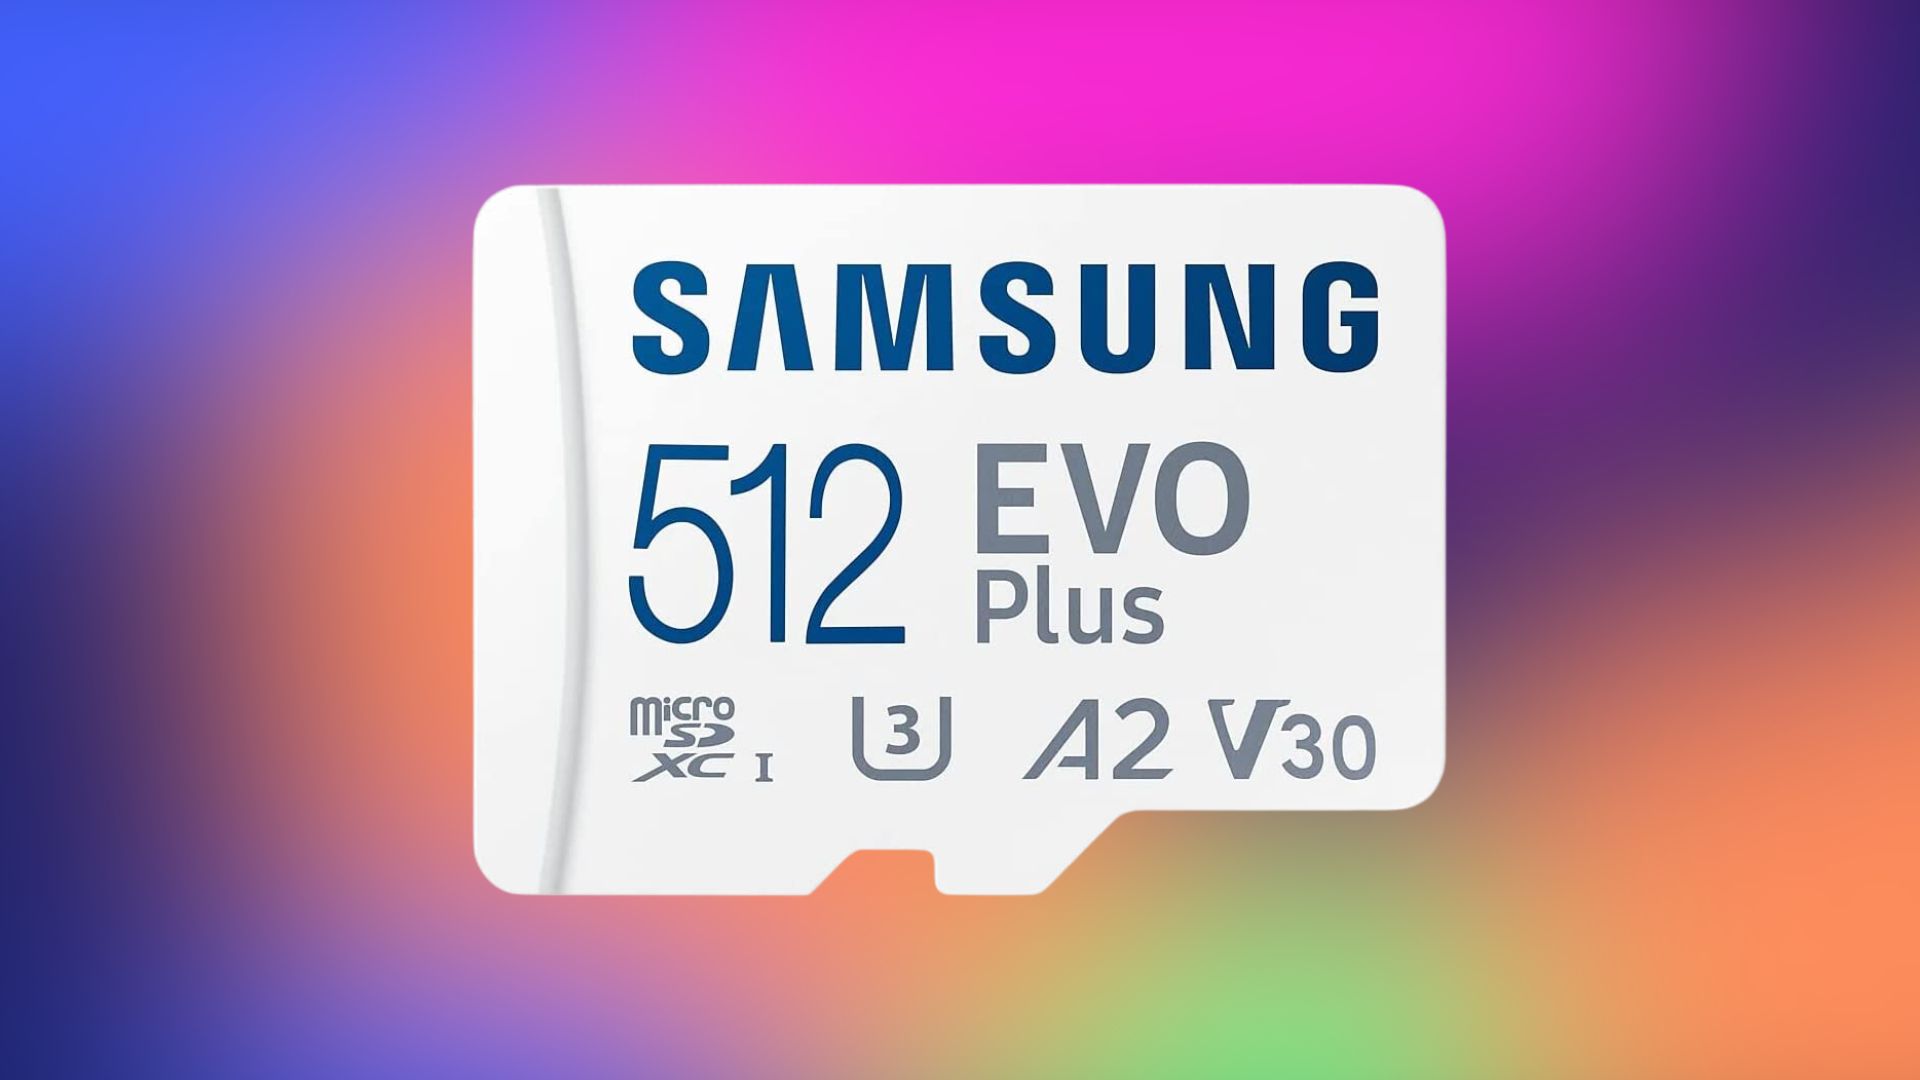 Samsung EVO Plus - Micro SD 512Go V30 - Carte mémoire Samsung